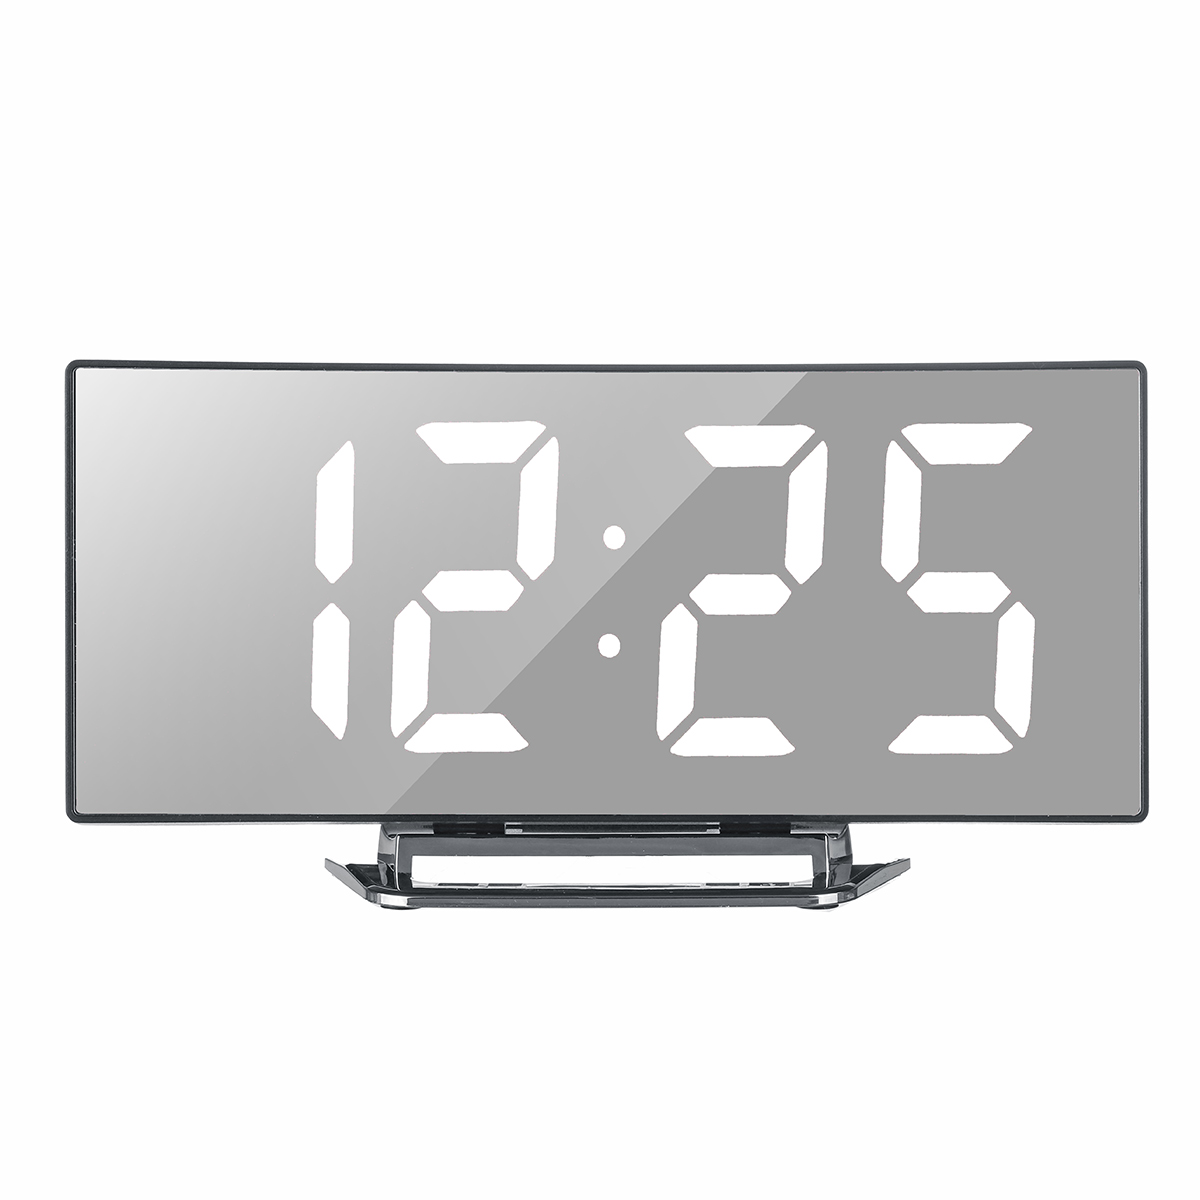 Curved-LED-Digital-Alarm-Clock-Mirror-Table-Display-Temperature-Snooze-USB-Room-1639017-5